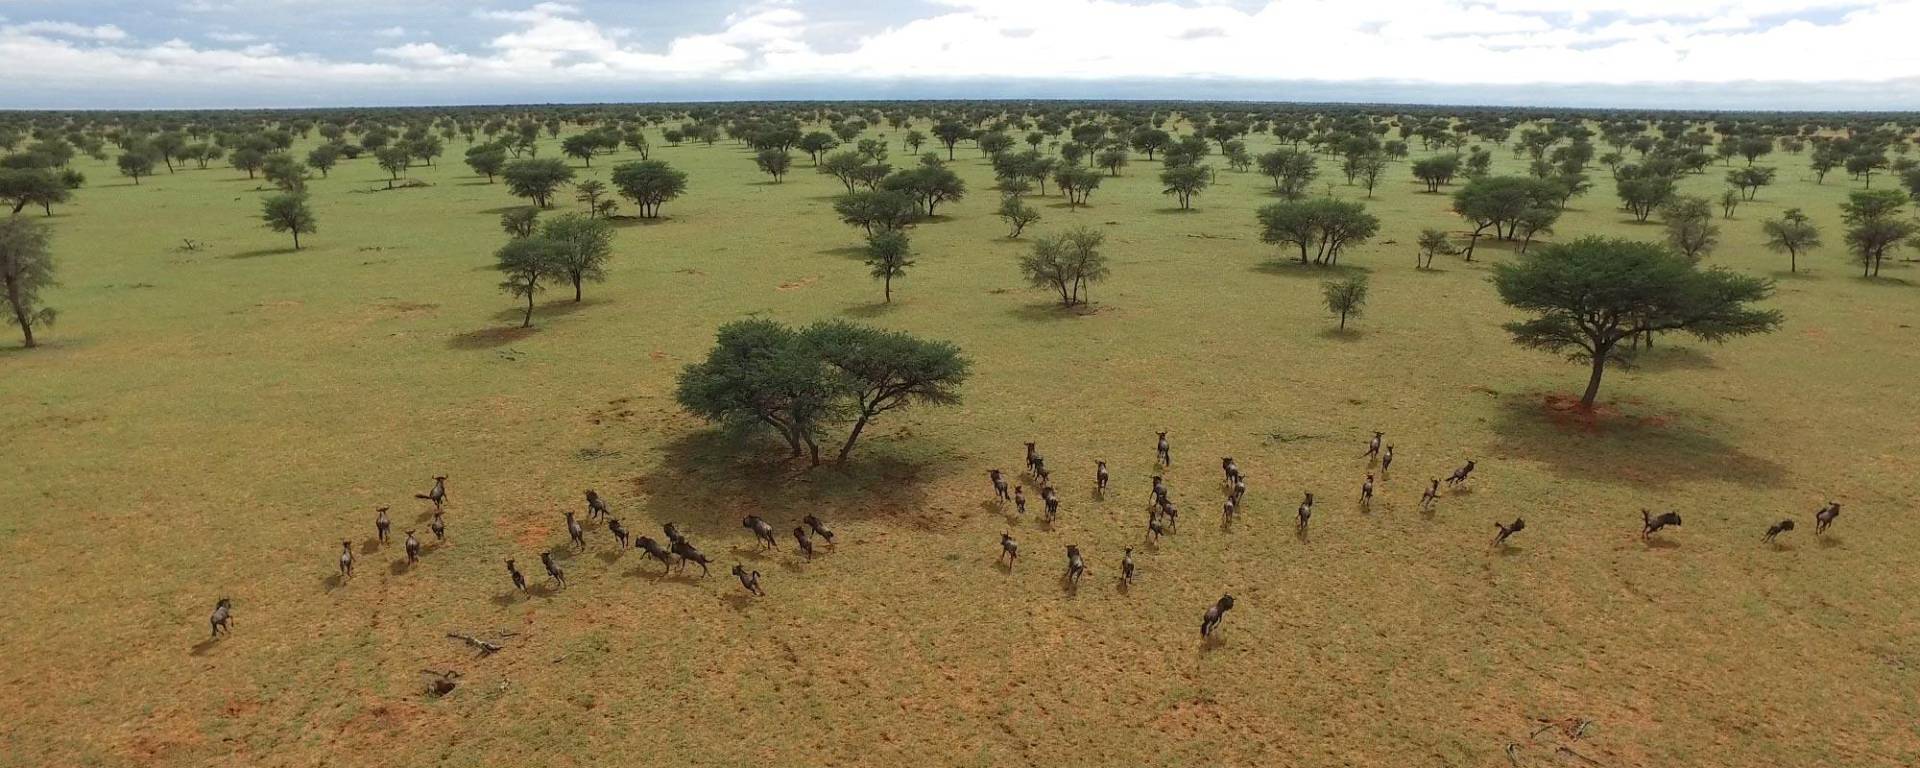 Drone image of a herd of wildebeest